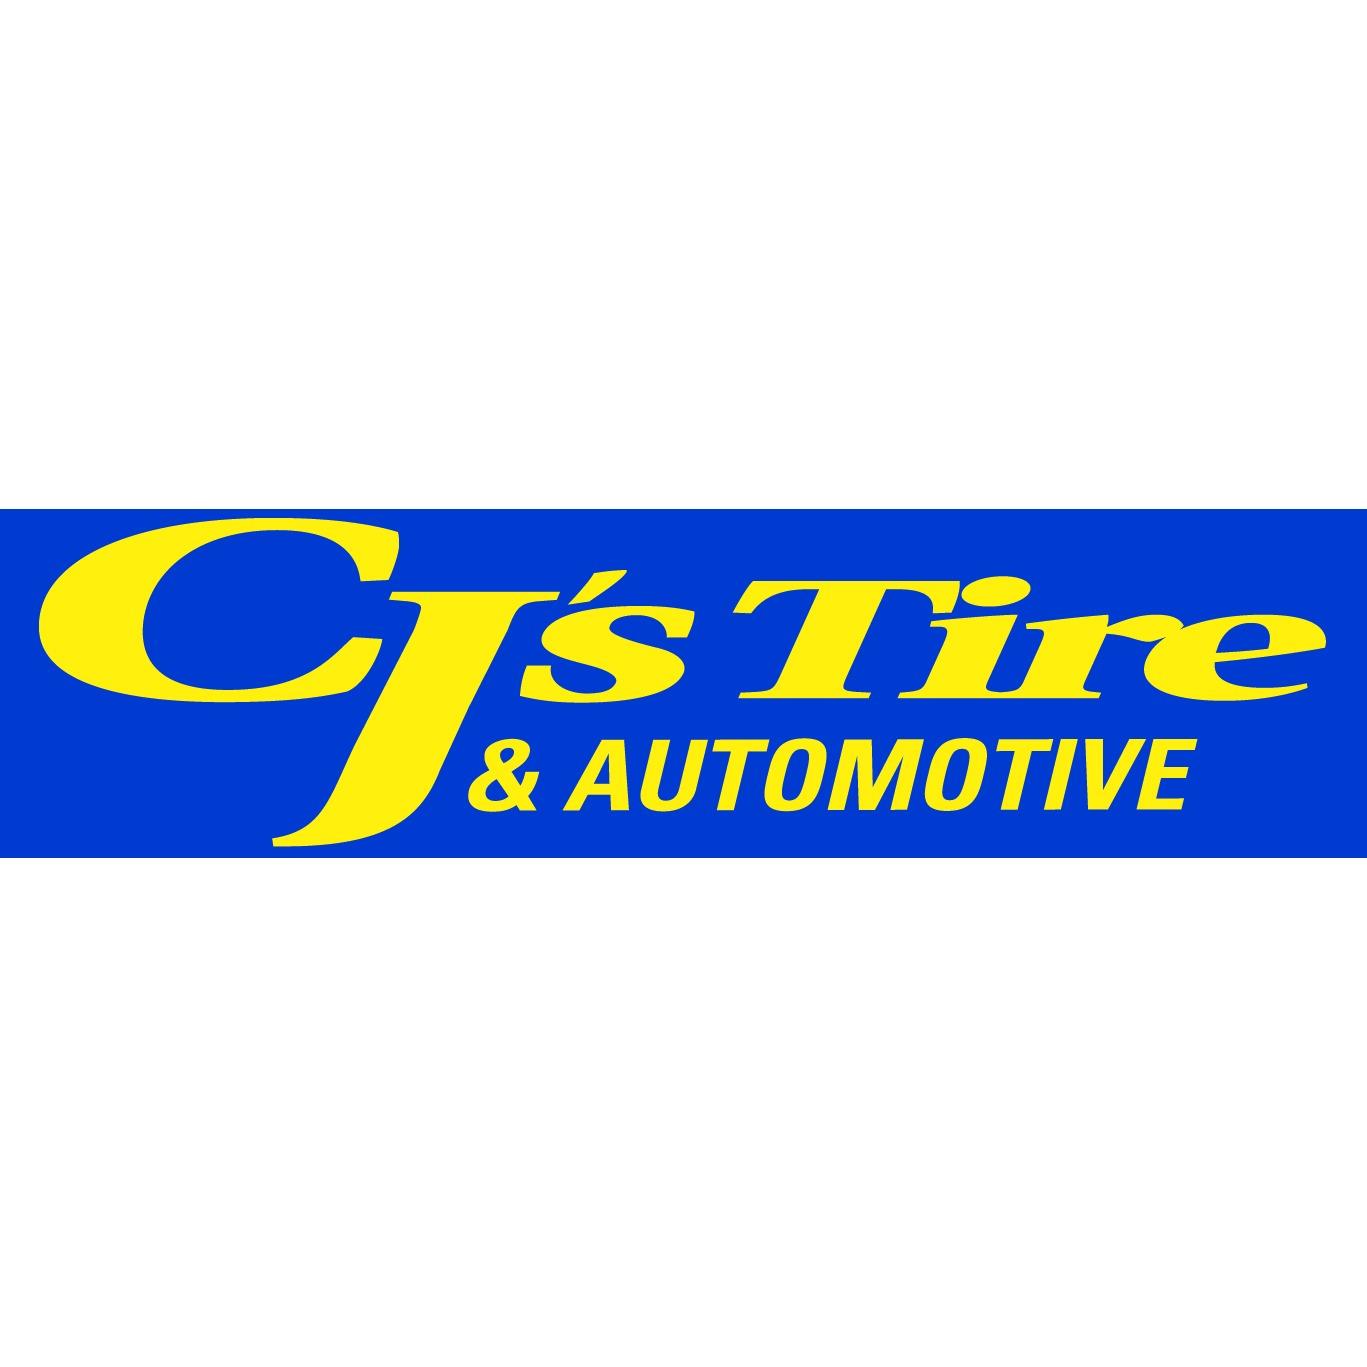 CJ's Tires & Automotive - Birdsboro, PA 19508 - (610)582-4266 | ShowMeLocal.com